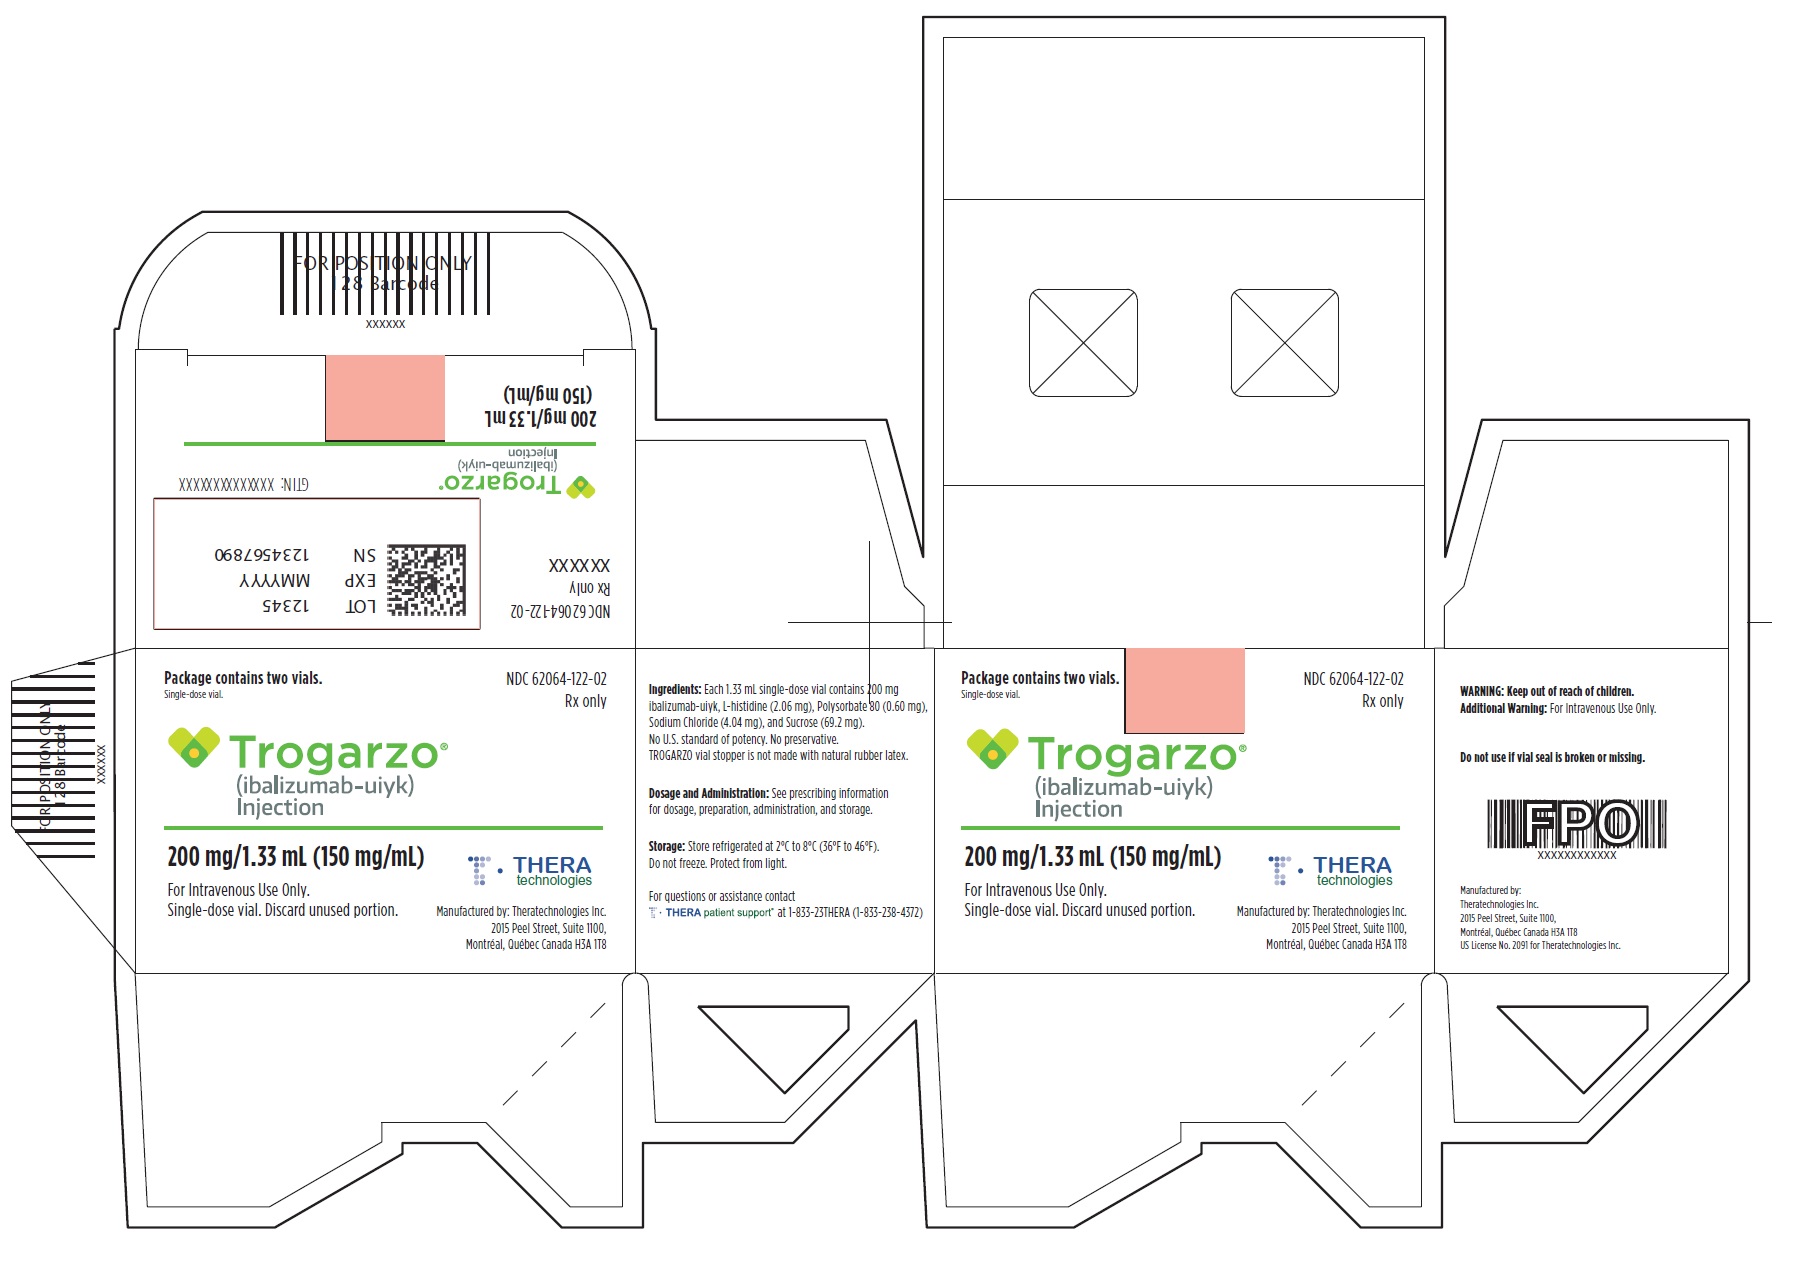 Principal Display Panel - Trogarzo Carton Label
